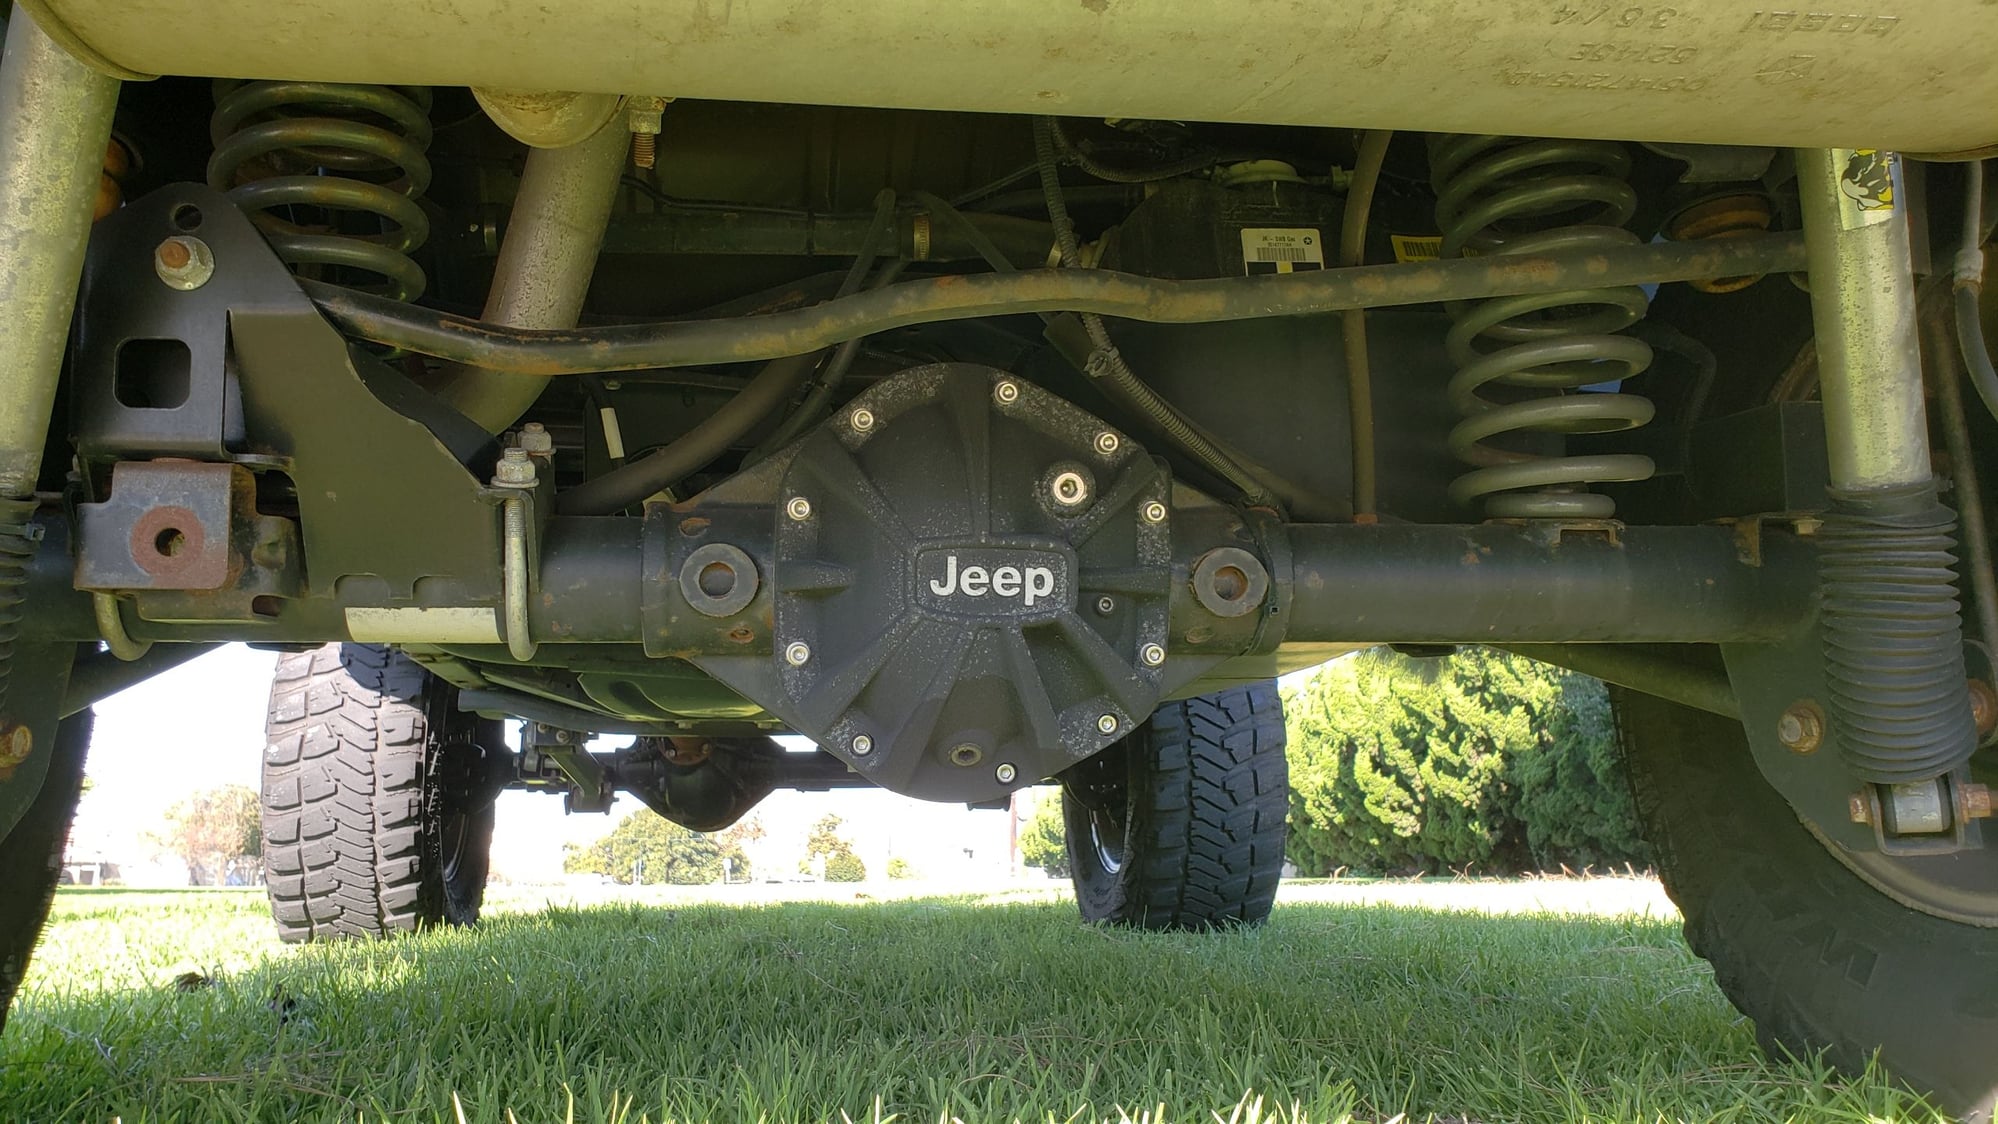 2014 Jeep Wrangler - 2014 AEV Jeep Rubicon, 42k mi - Used - VIN 1c4bjwcg9el241546 - 42,350 Miles - 6 cyl - 4WD - Automatic - SUV - Black - El Segundo, CA 90245, United States